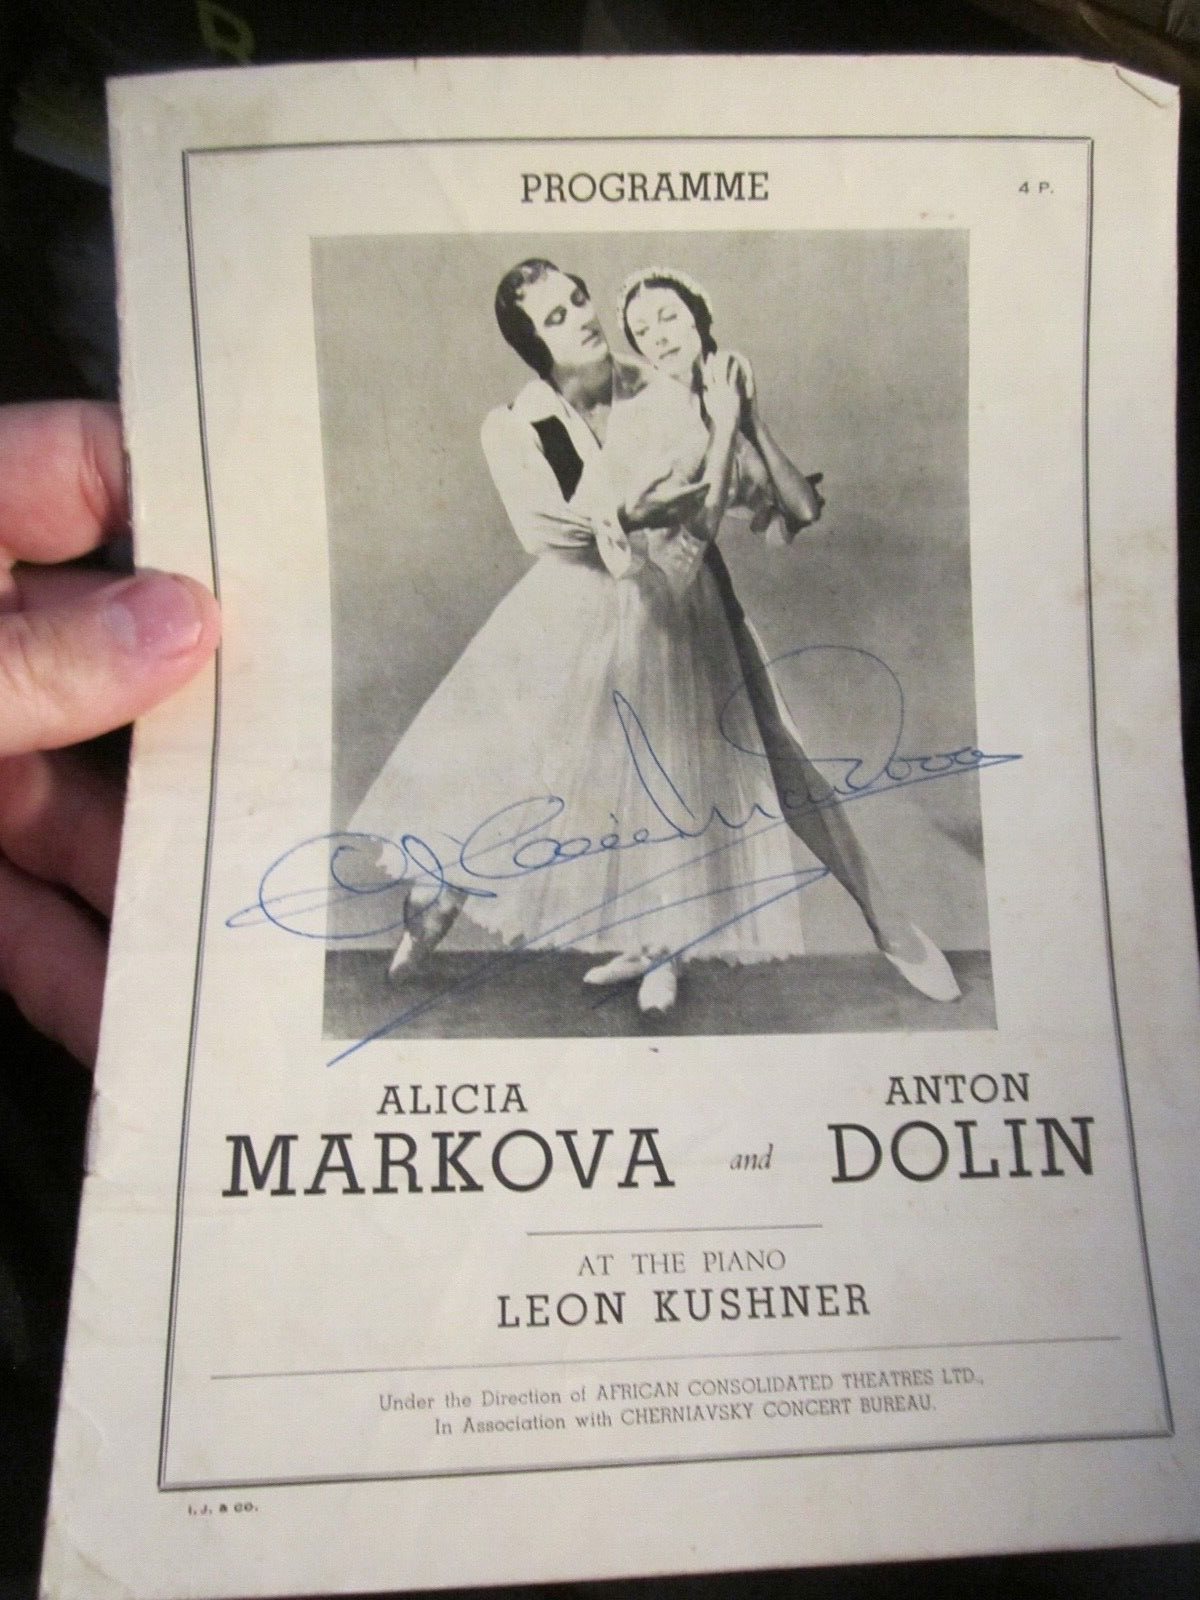 VINTAGE ALICIA MARKOVA AND ANTON DOLIN BALLET PROGRAM WITH AUTOGRAPH - BBA-41